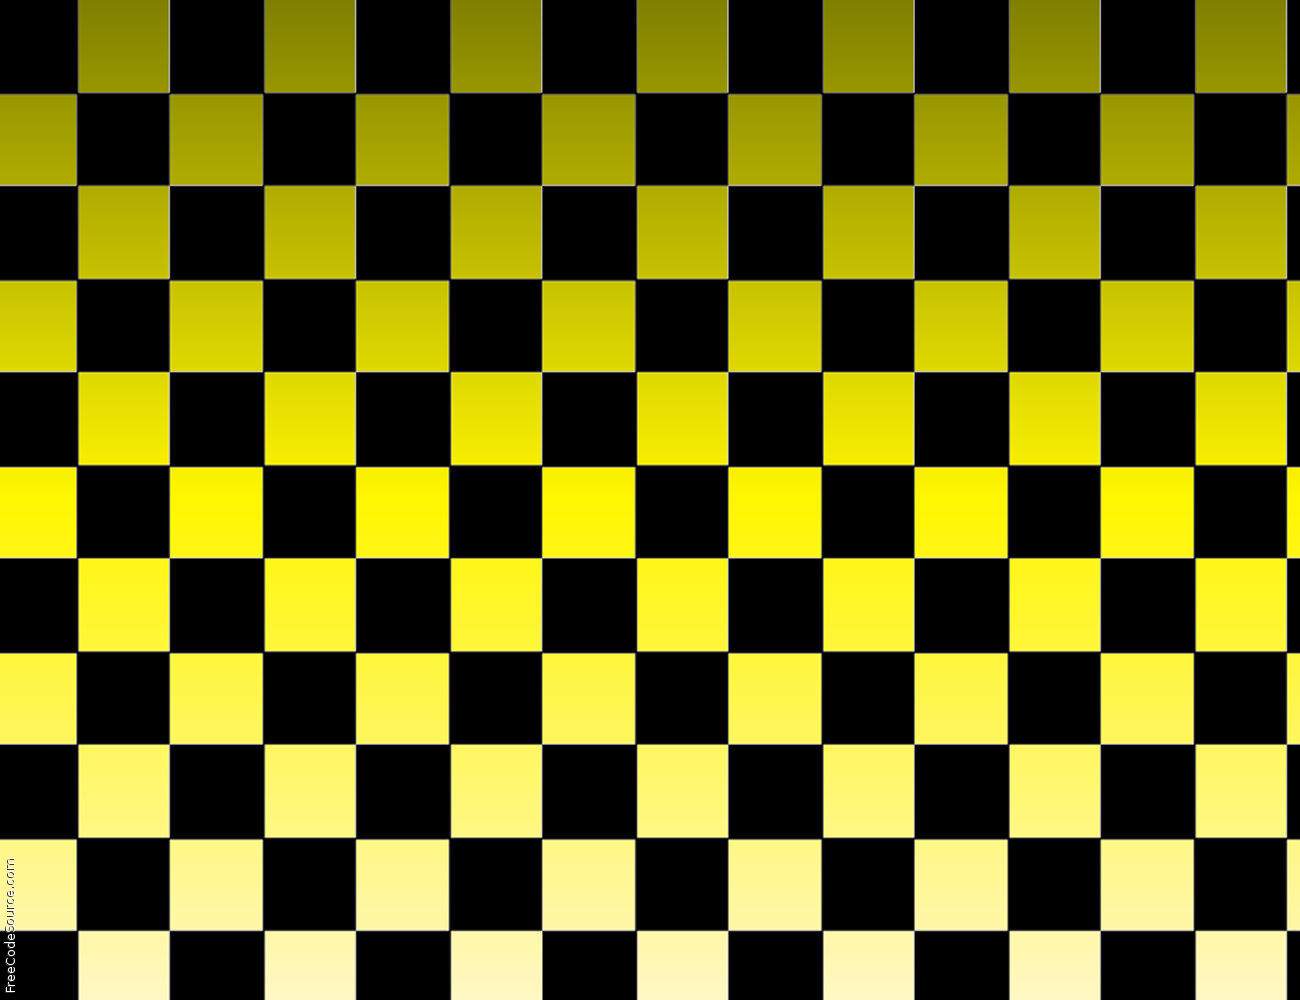 http://2.bp.blogspot.com/-eqg4elKbKDM/UGgy8zsWDQI/AAAAAAAAAgY/ooG-ETcWWAM/s1600/black-and-yellow-squares-hd-background-wallpaper.jpg